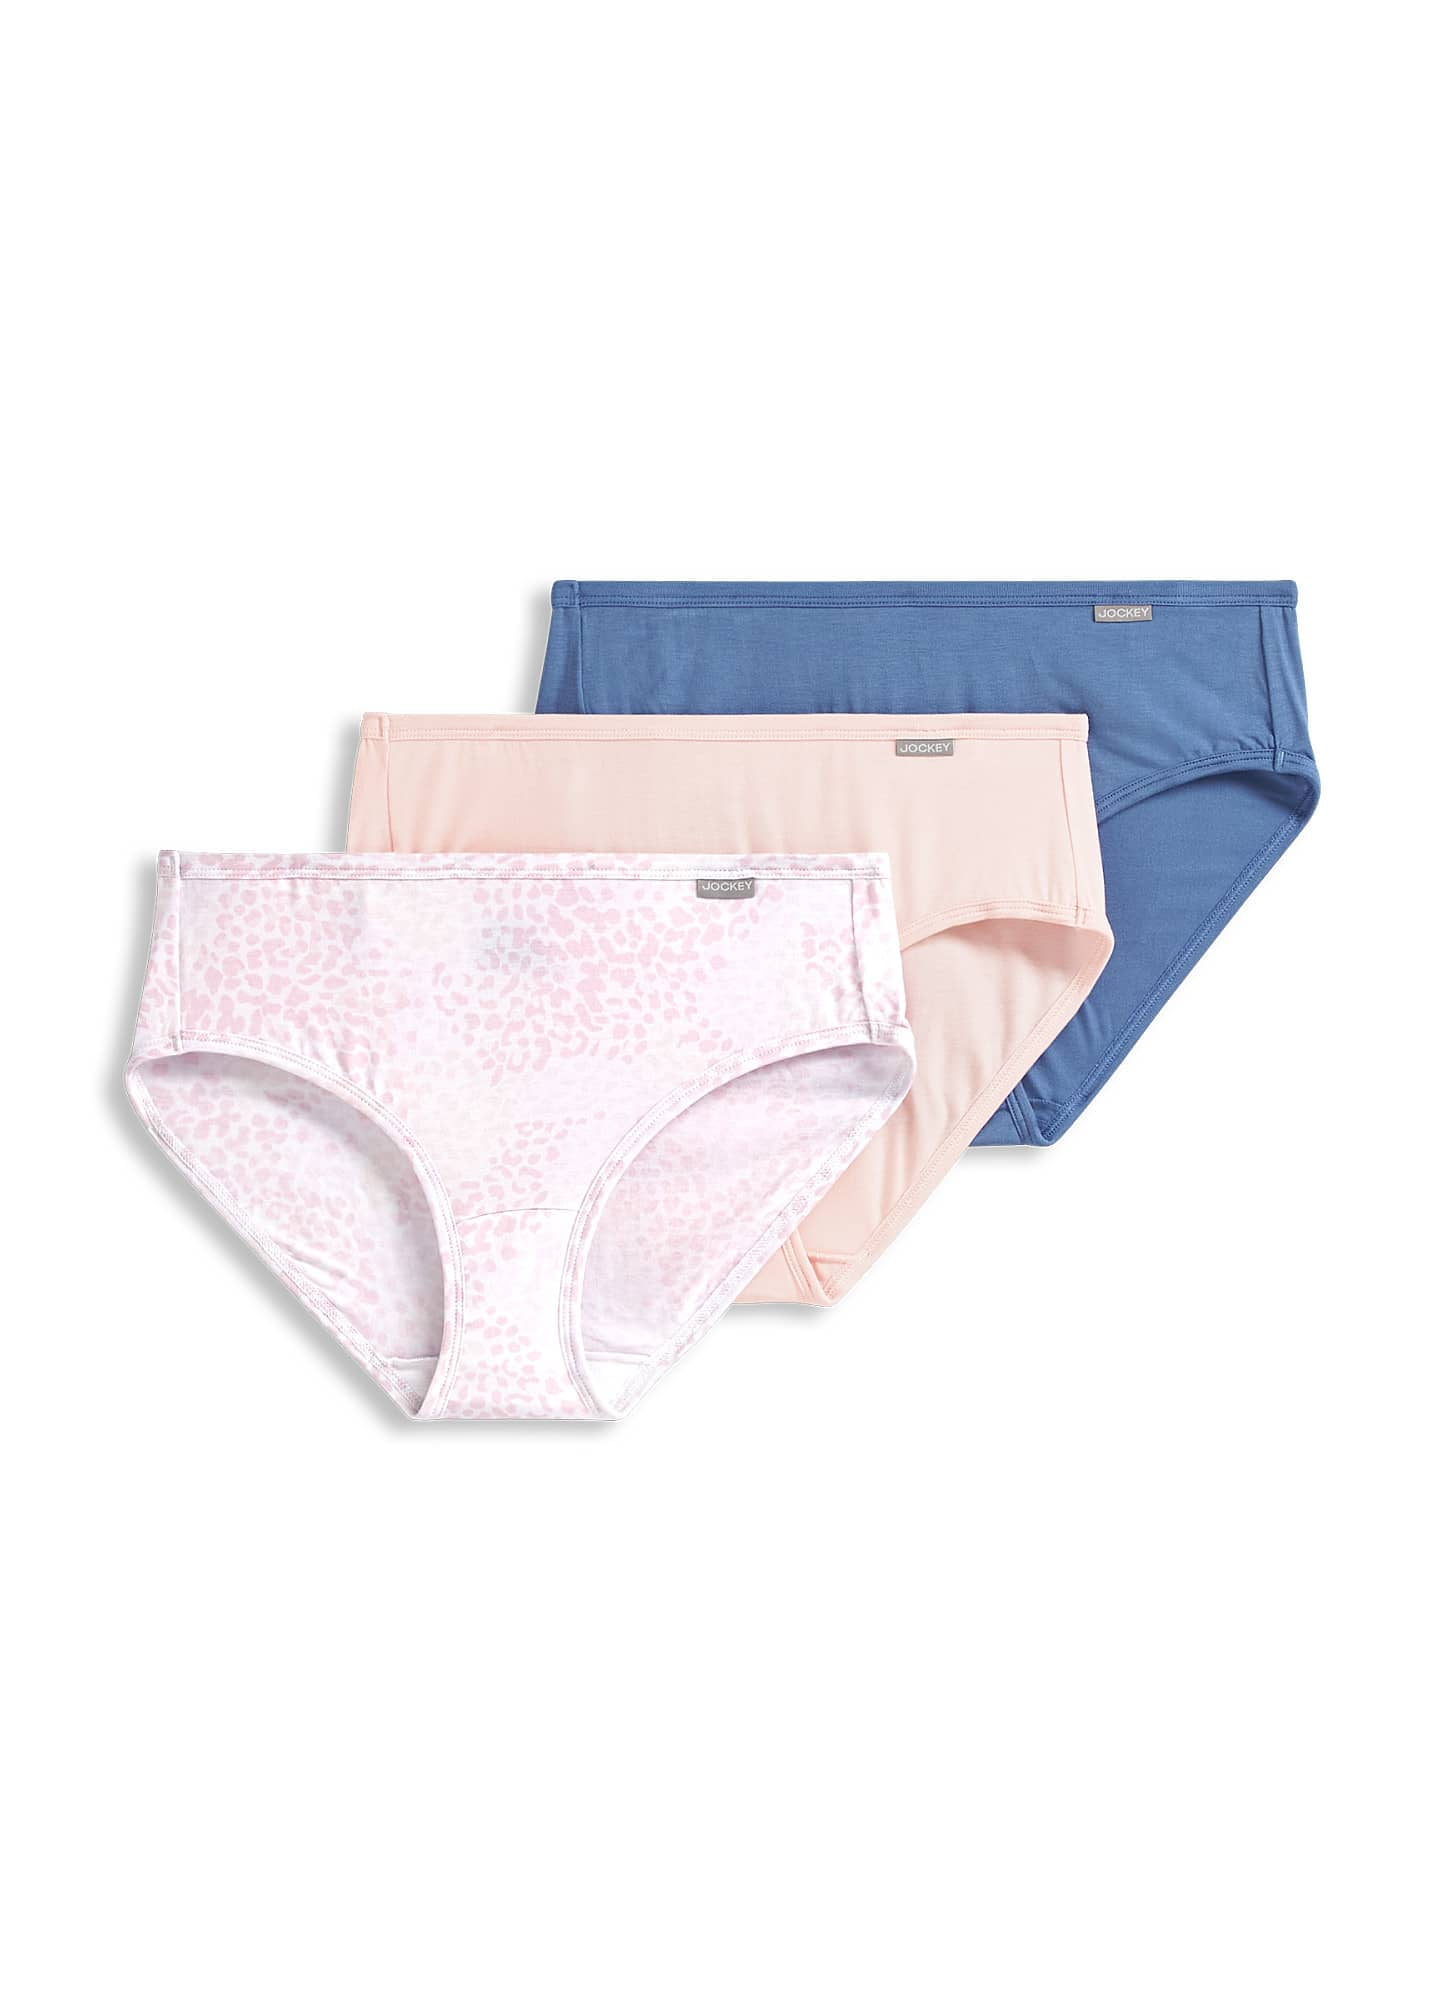 Jockey Women's Underwear Supersoft Breathe French Cut - 3 Pack,  Black/Ivory/Light, 7